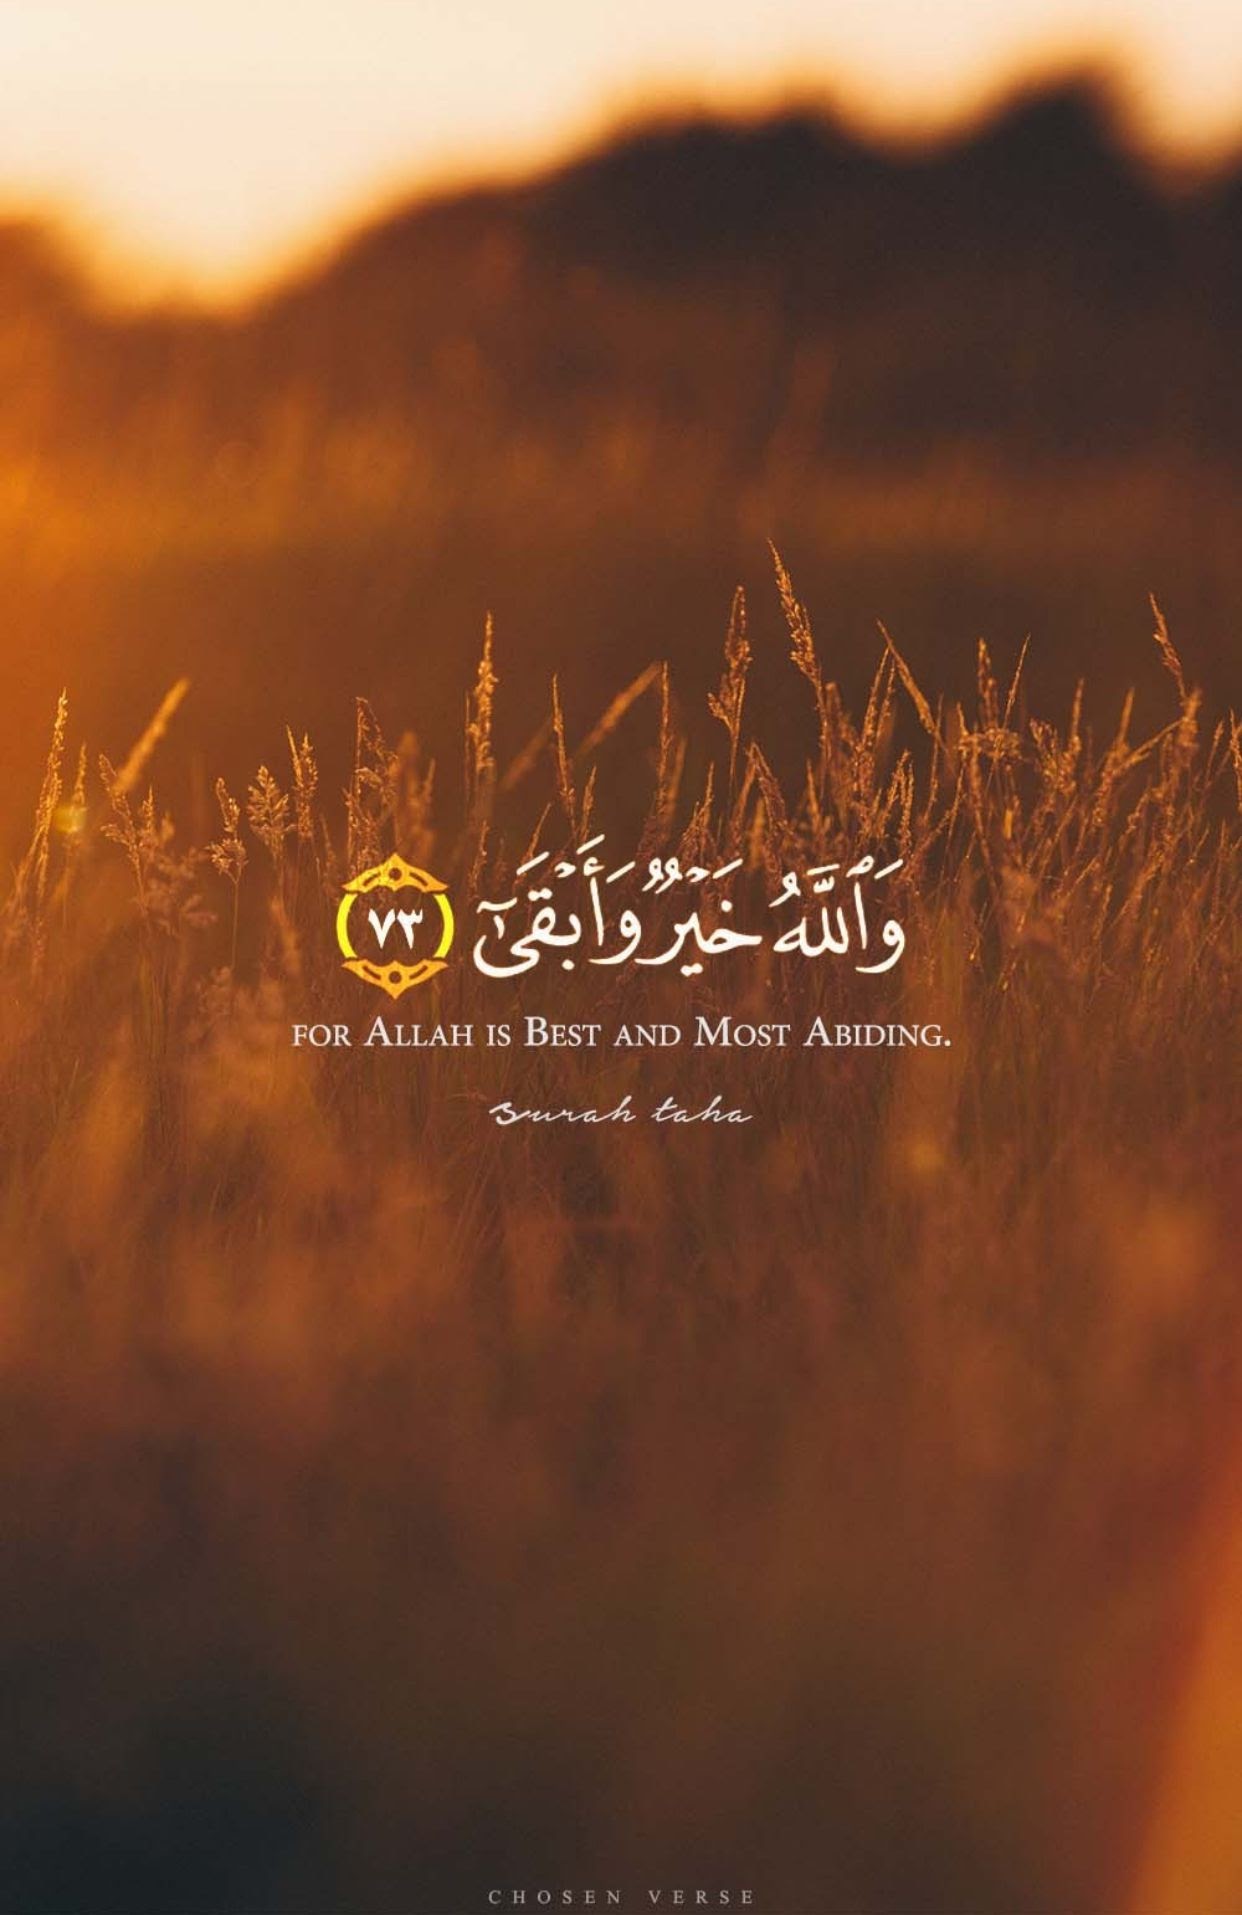 Beautiful Verses From The Quran In Arabic